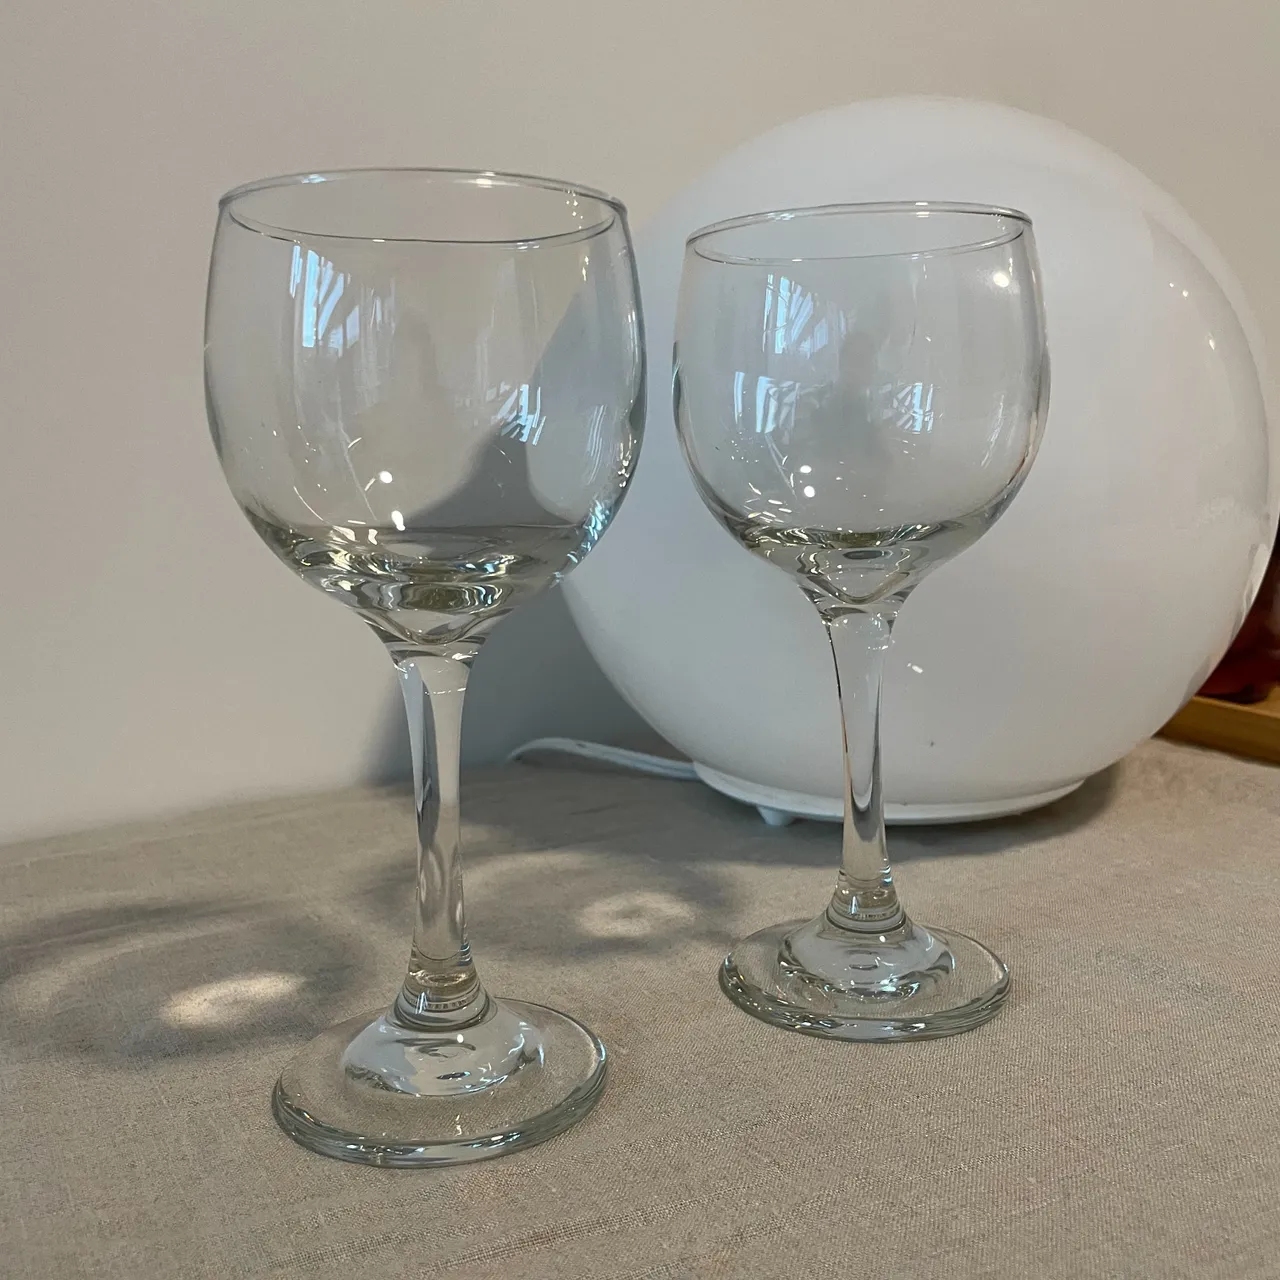 Wine glasses photo 1